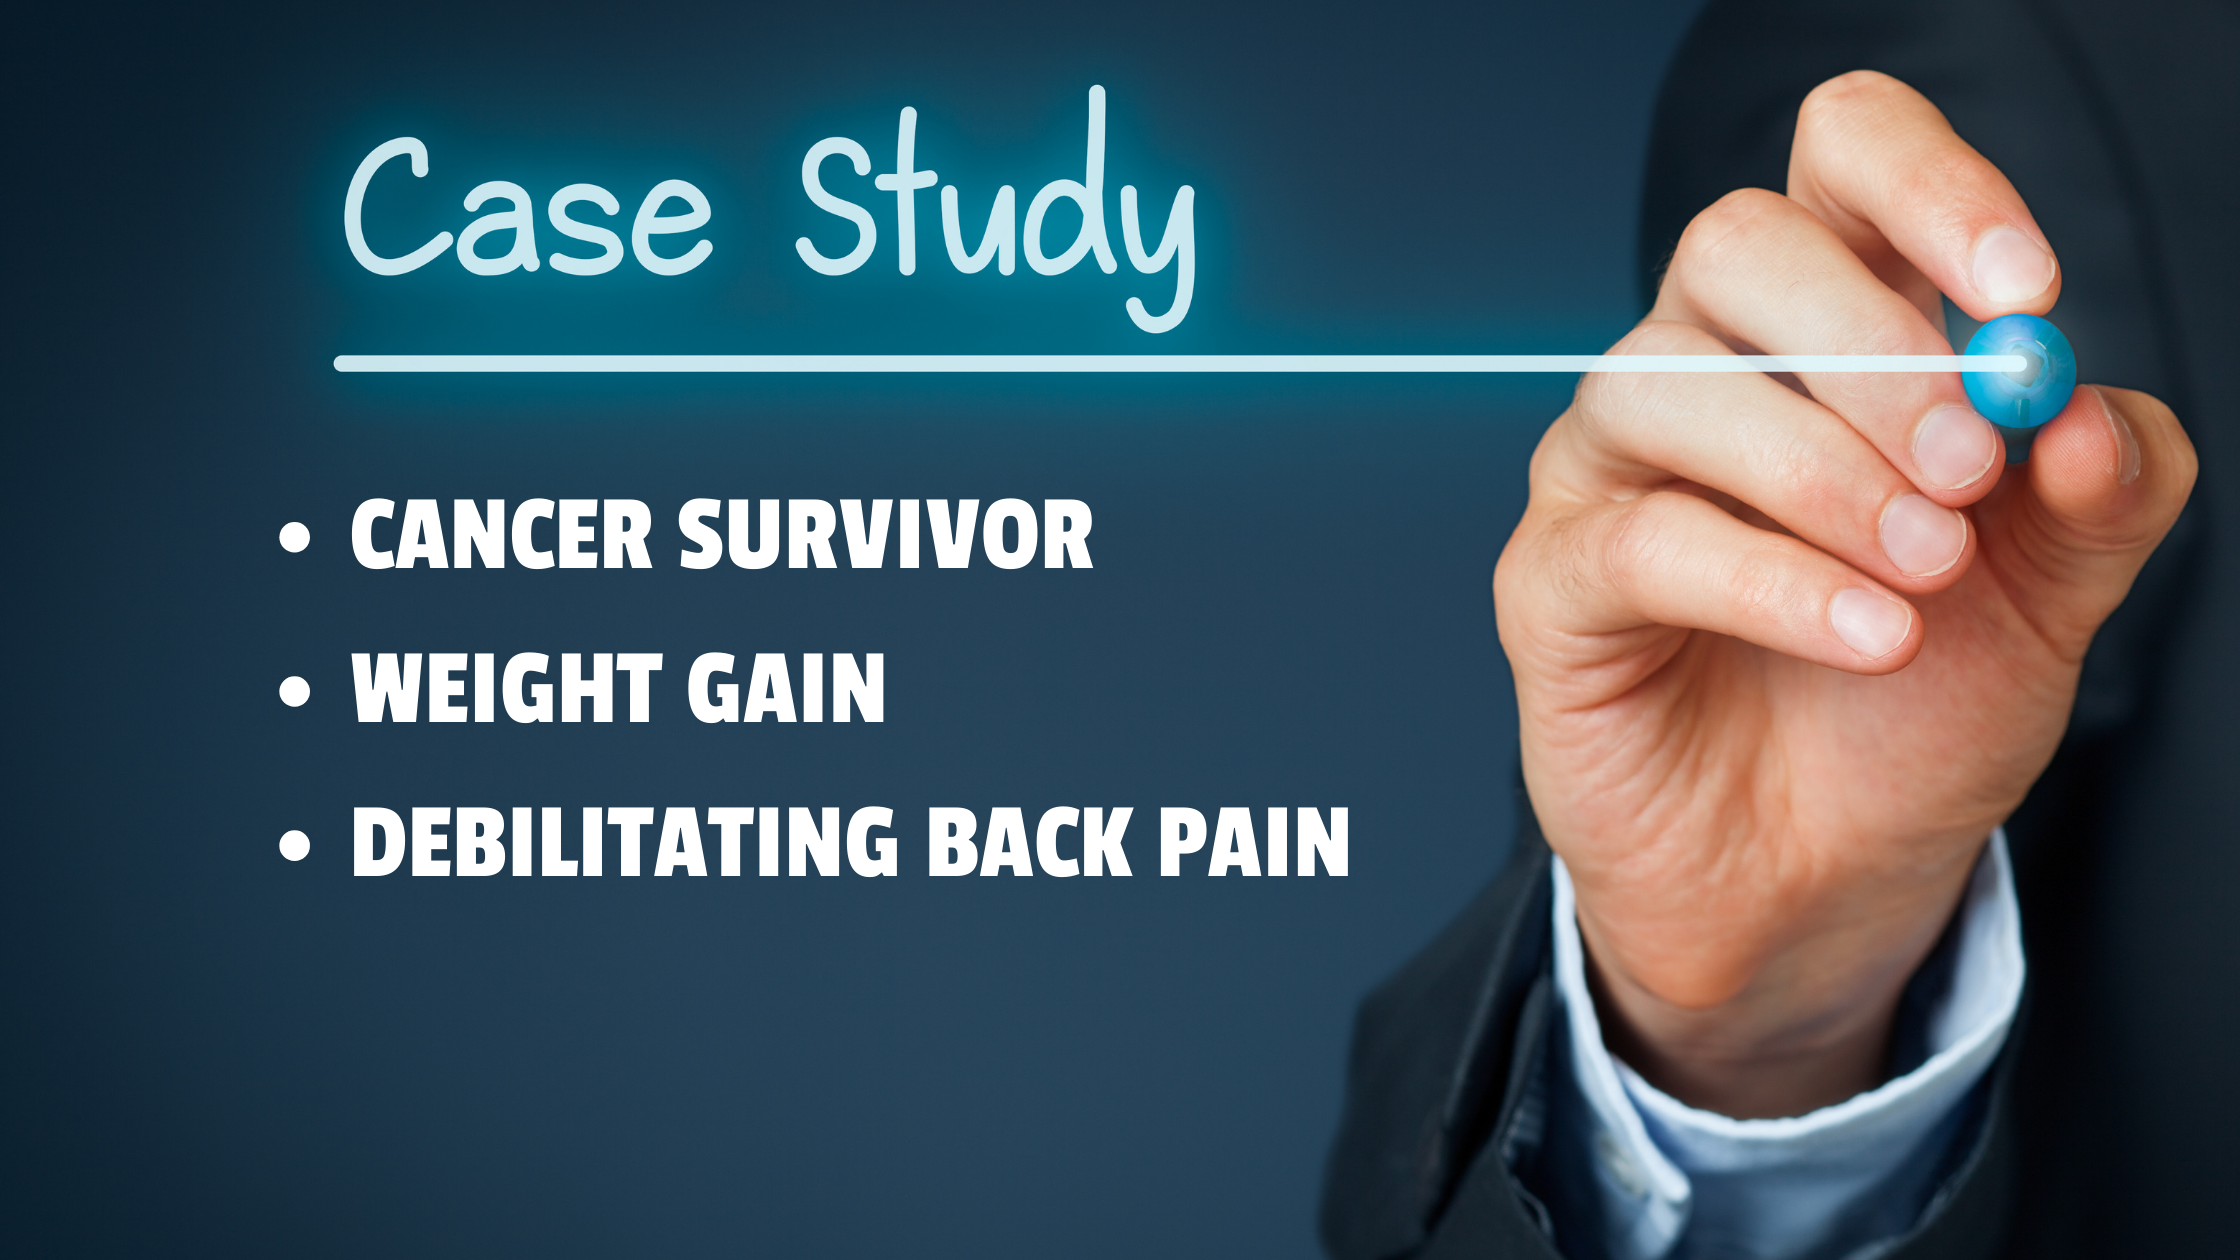 Cancer Survivor and Debilitating Back Pain – NBChem Case Study